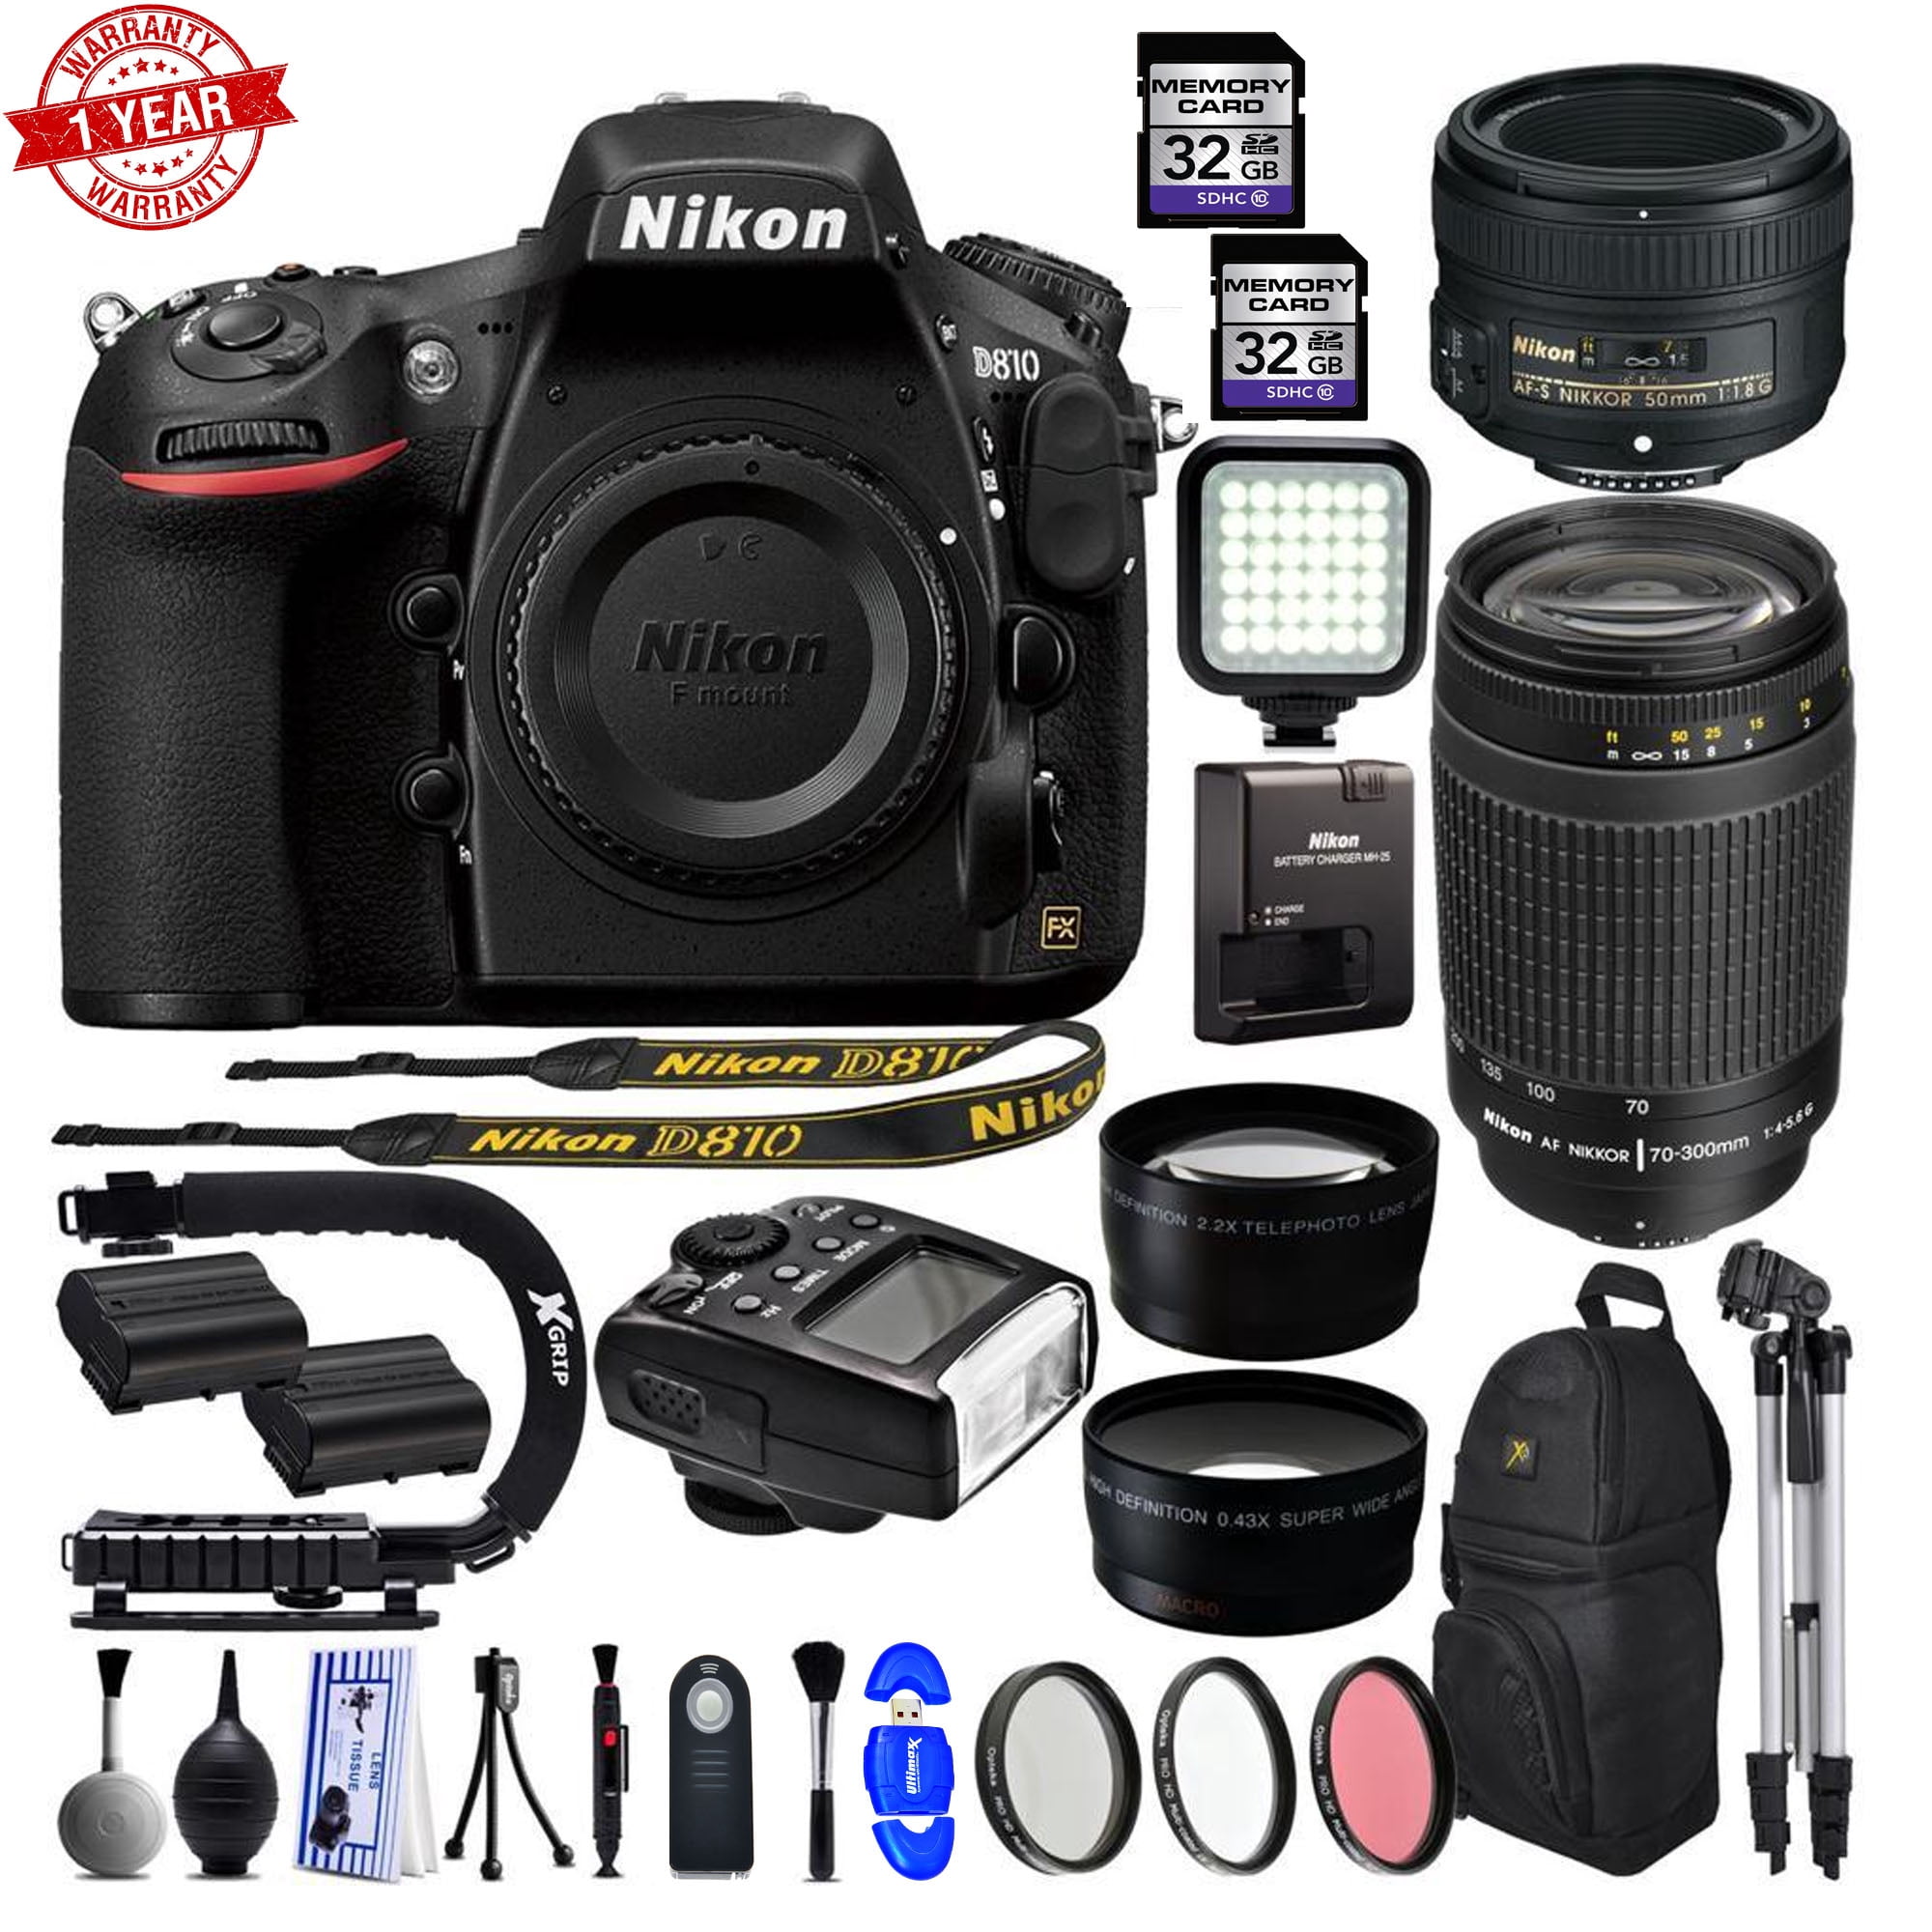 Nikon D810 36.3MP 1080P DSLR Camera w/ Wi-Fi & GPS Ready - 4 Lens